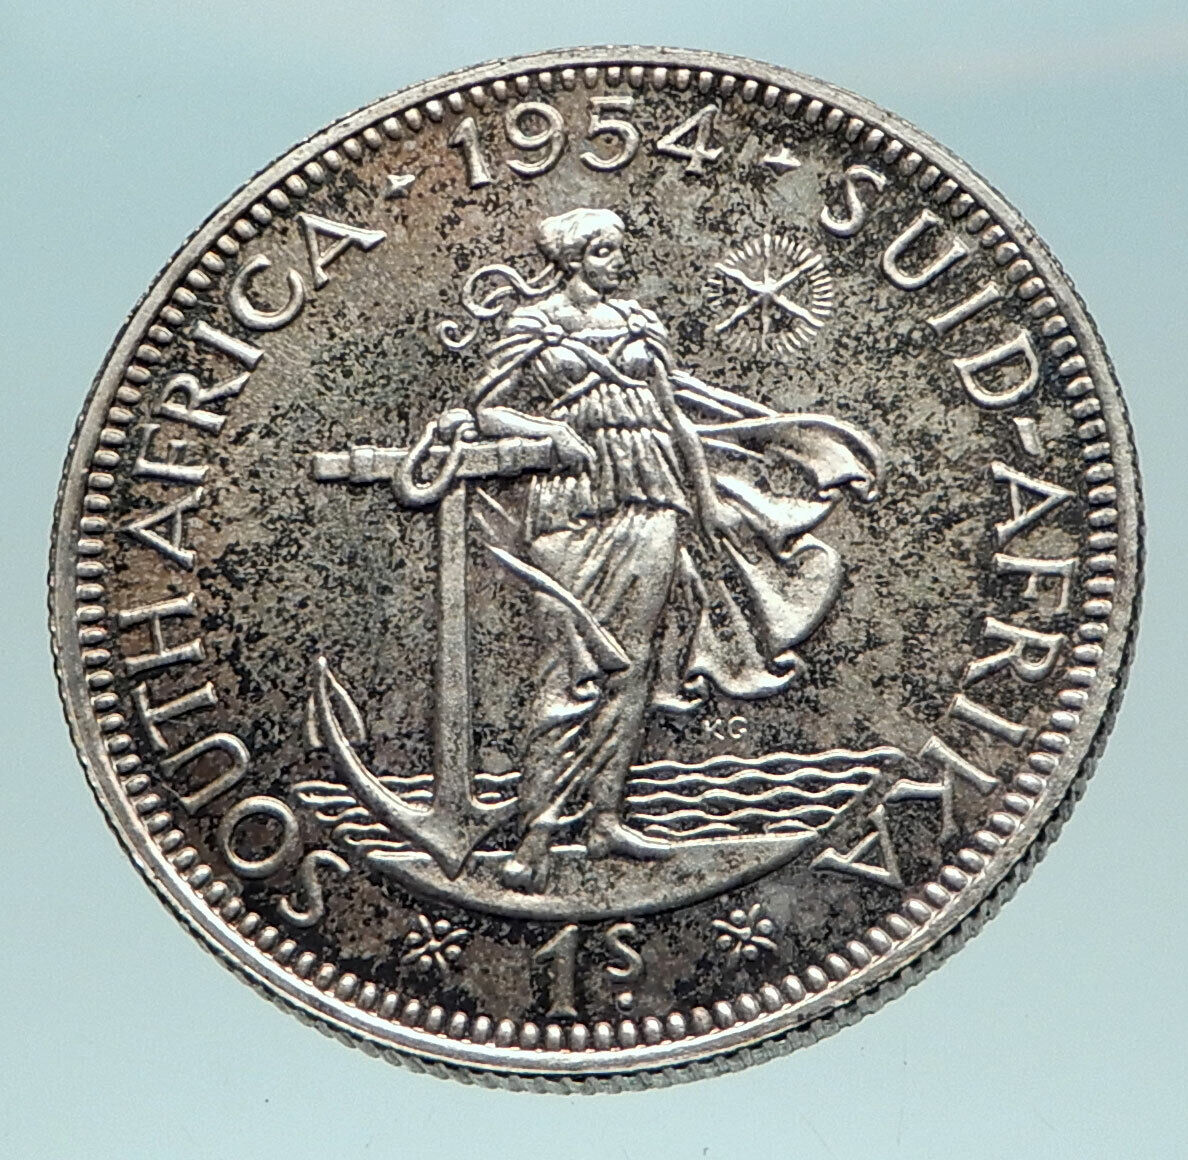 1954 SOUTH AFRICA Queen Elizabeth II Genuine Silver Shilling Coin i82673